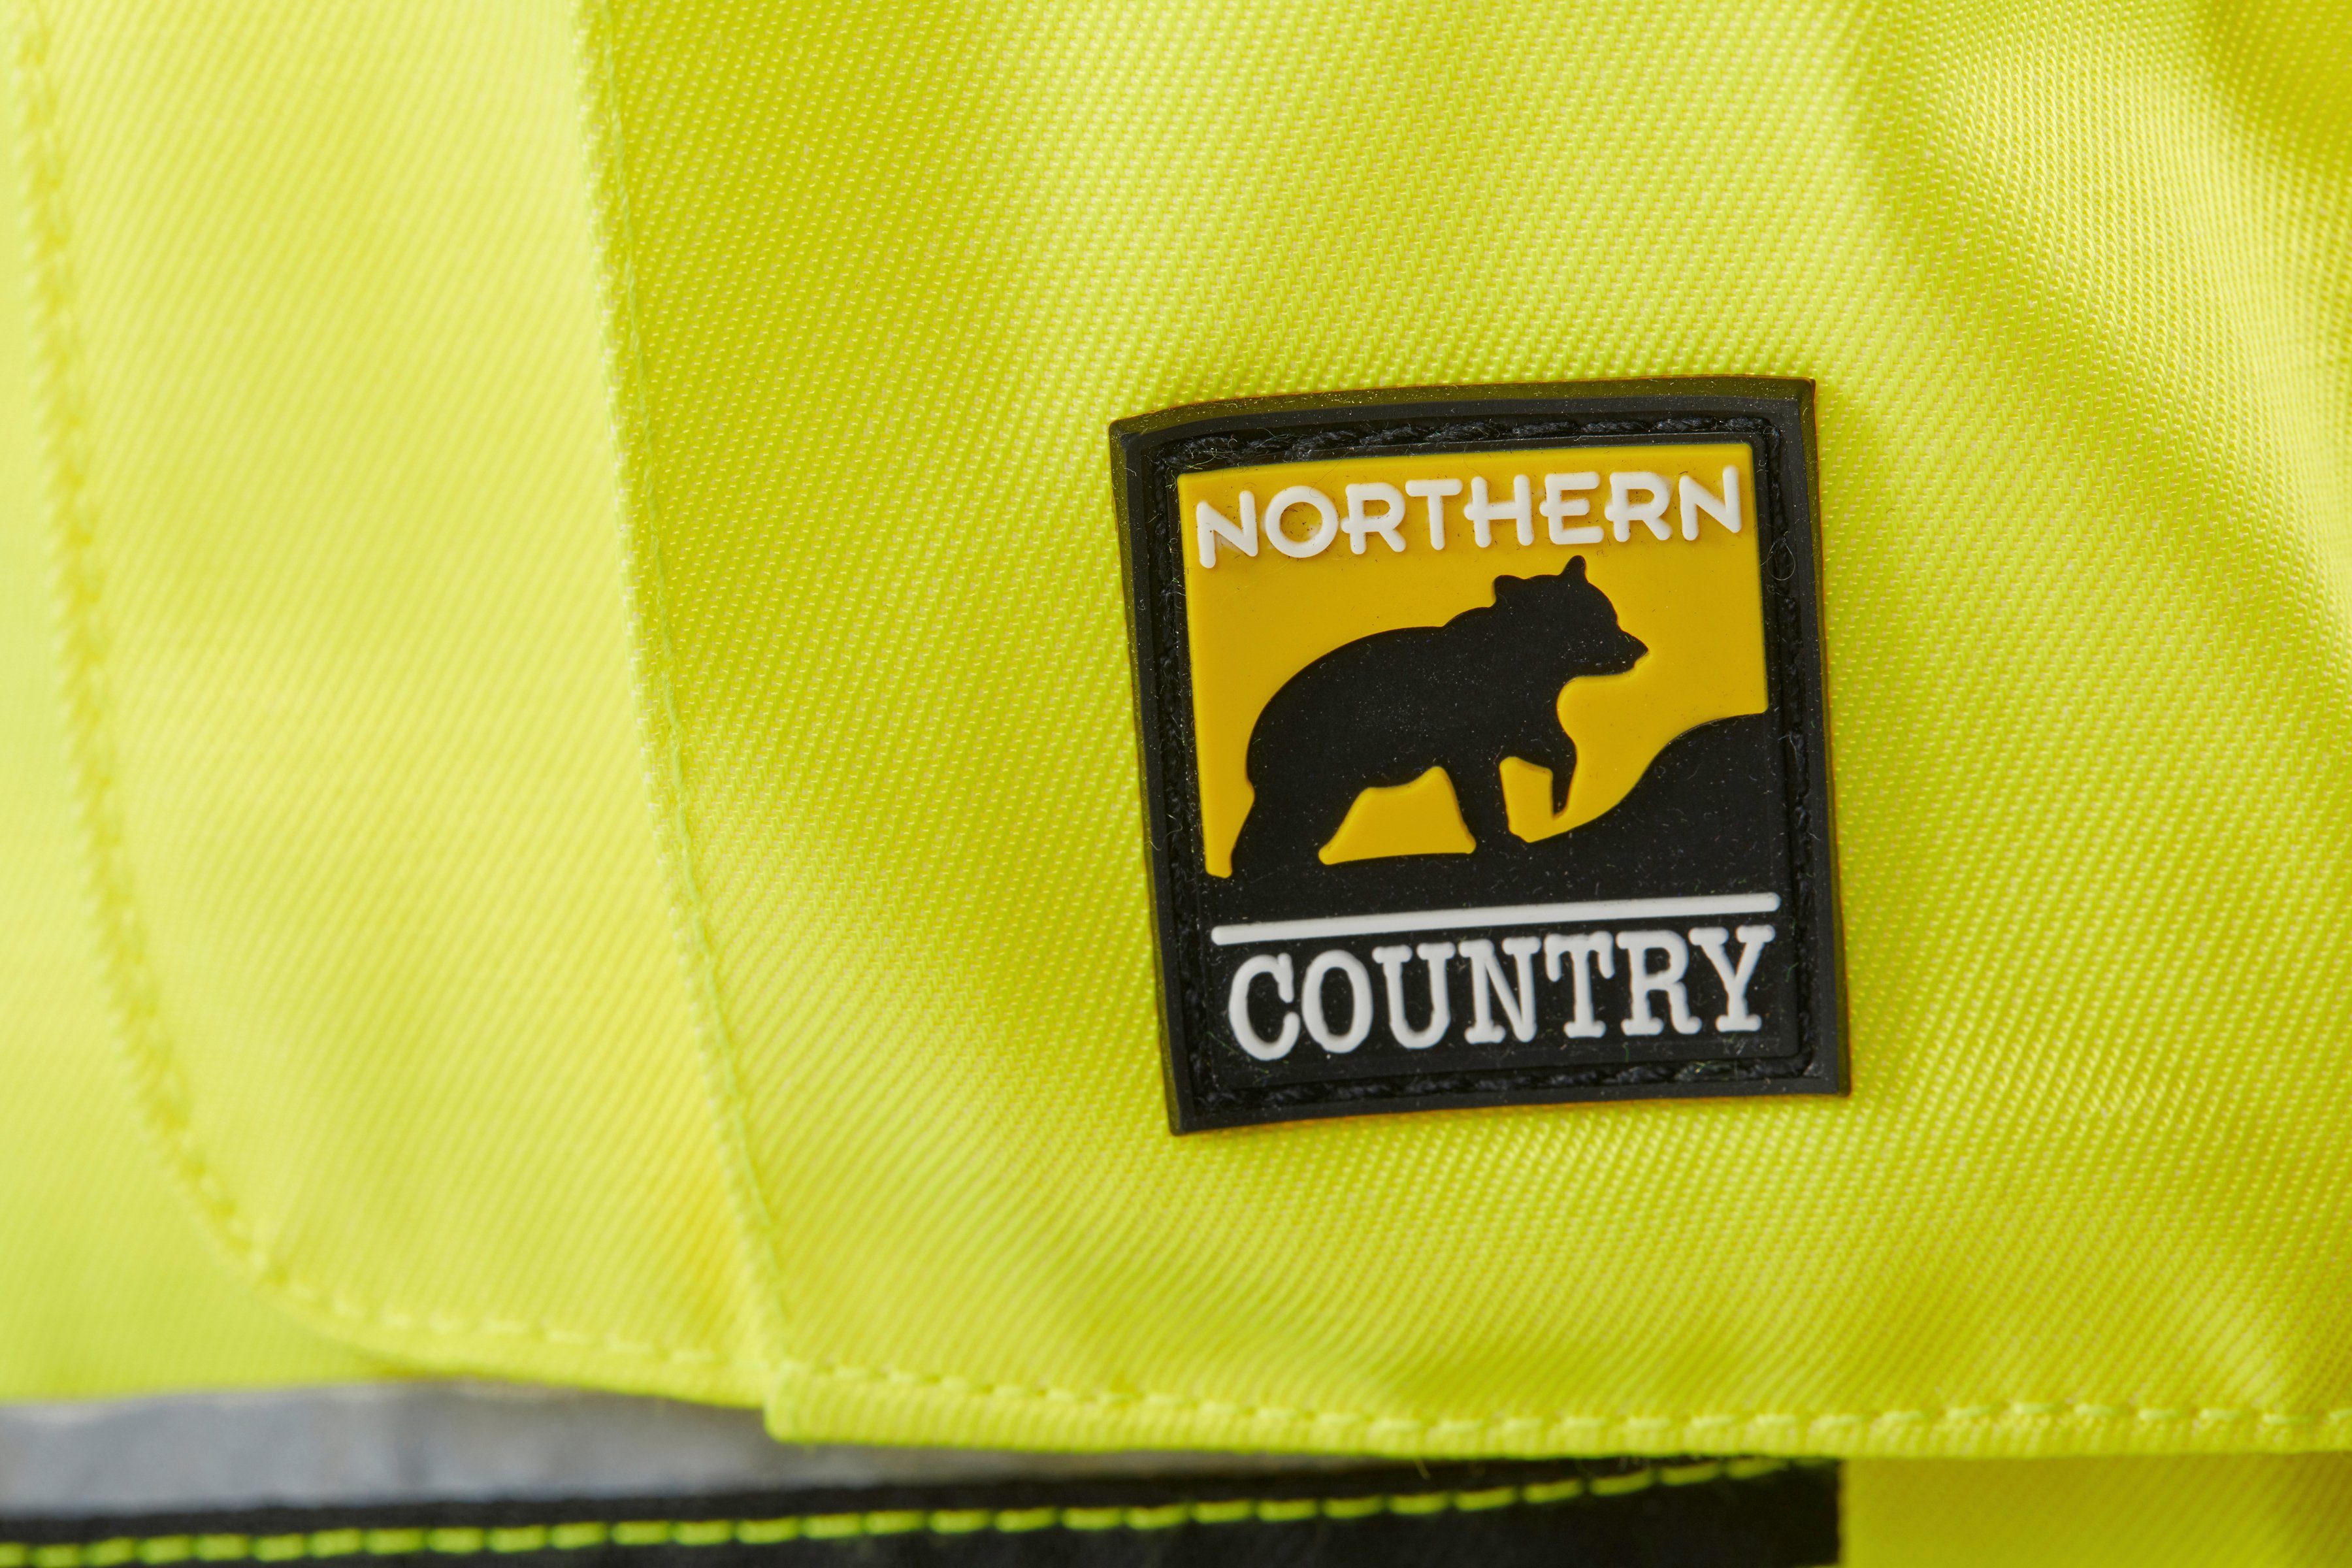 Herren Hosen Northern Country Arbeitshose Worker Zertifiziert nach EN ISO 20471:2013 und EN ISO 13688:2013